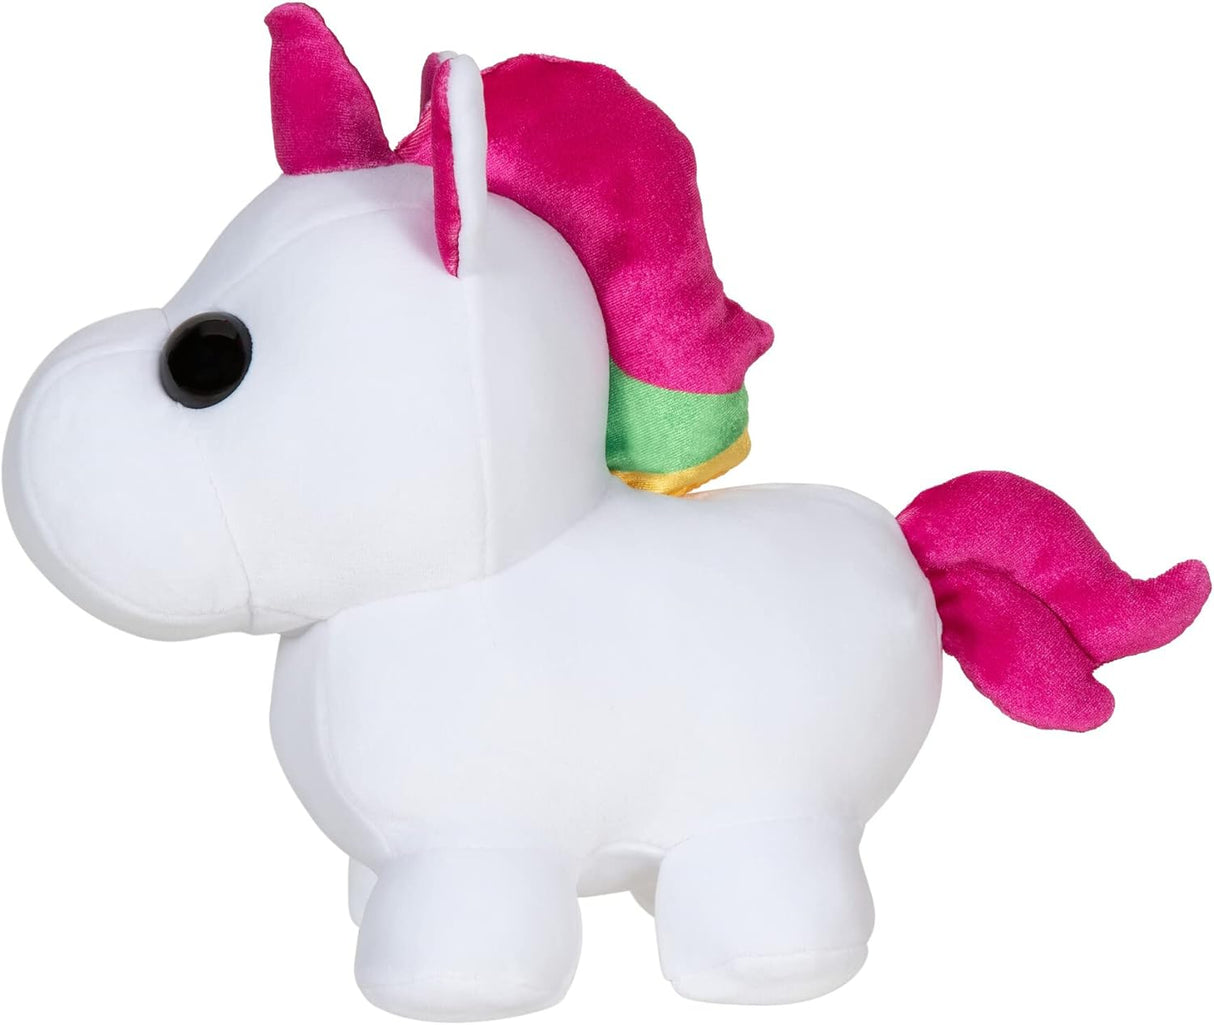 Adopt Me 8" | Collector Plush | Unicorn